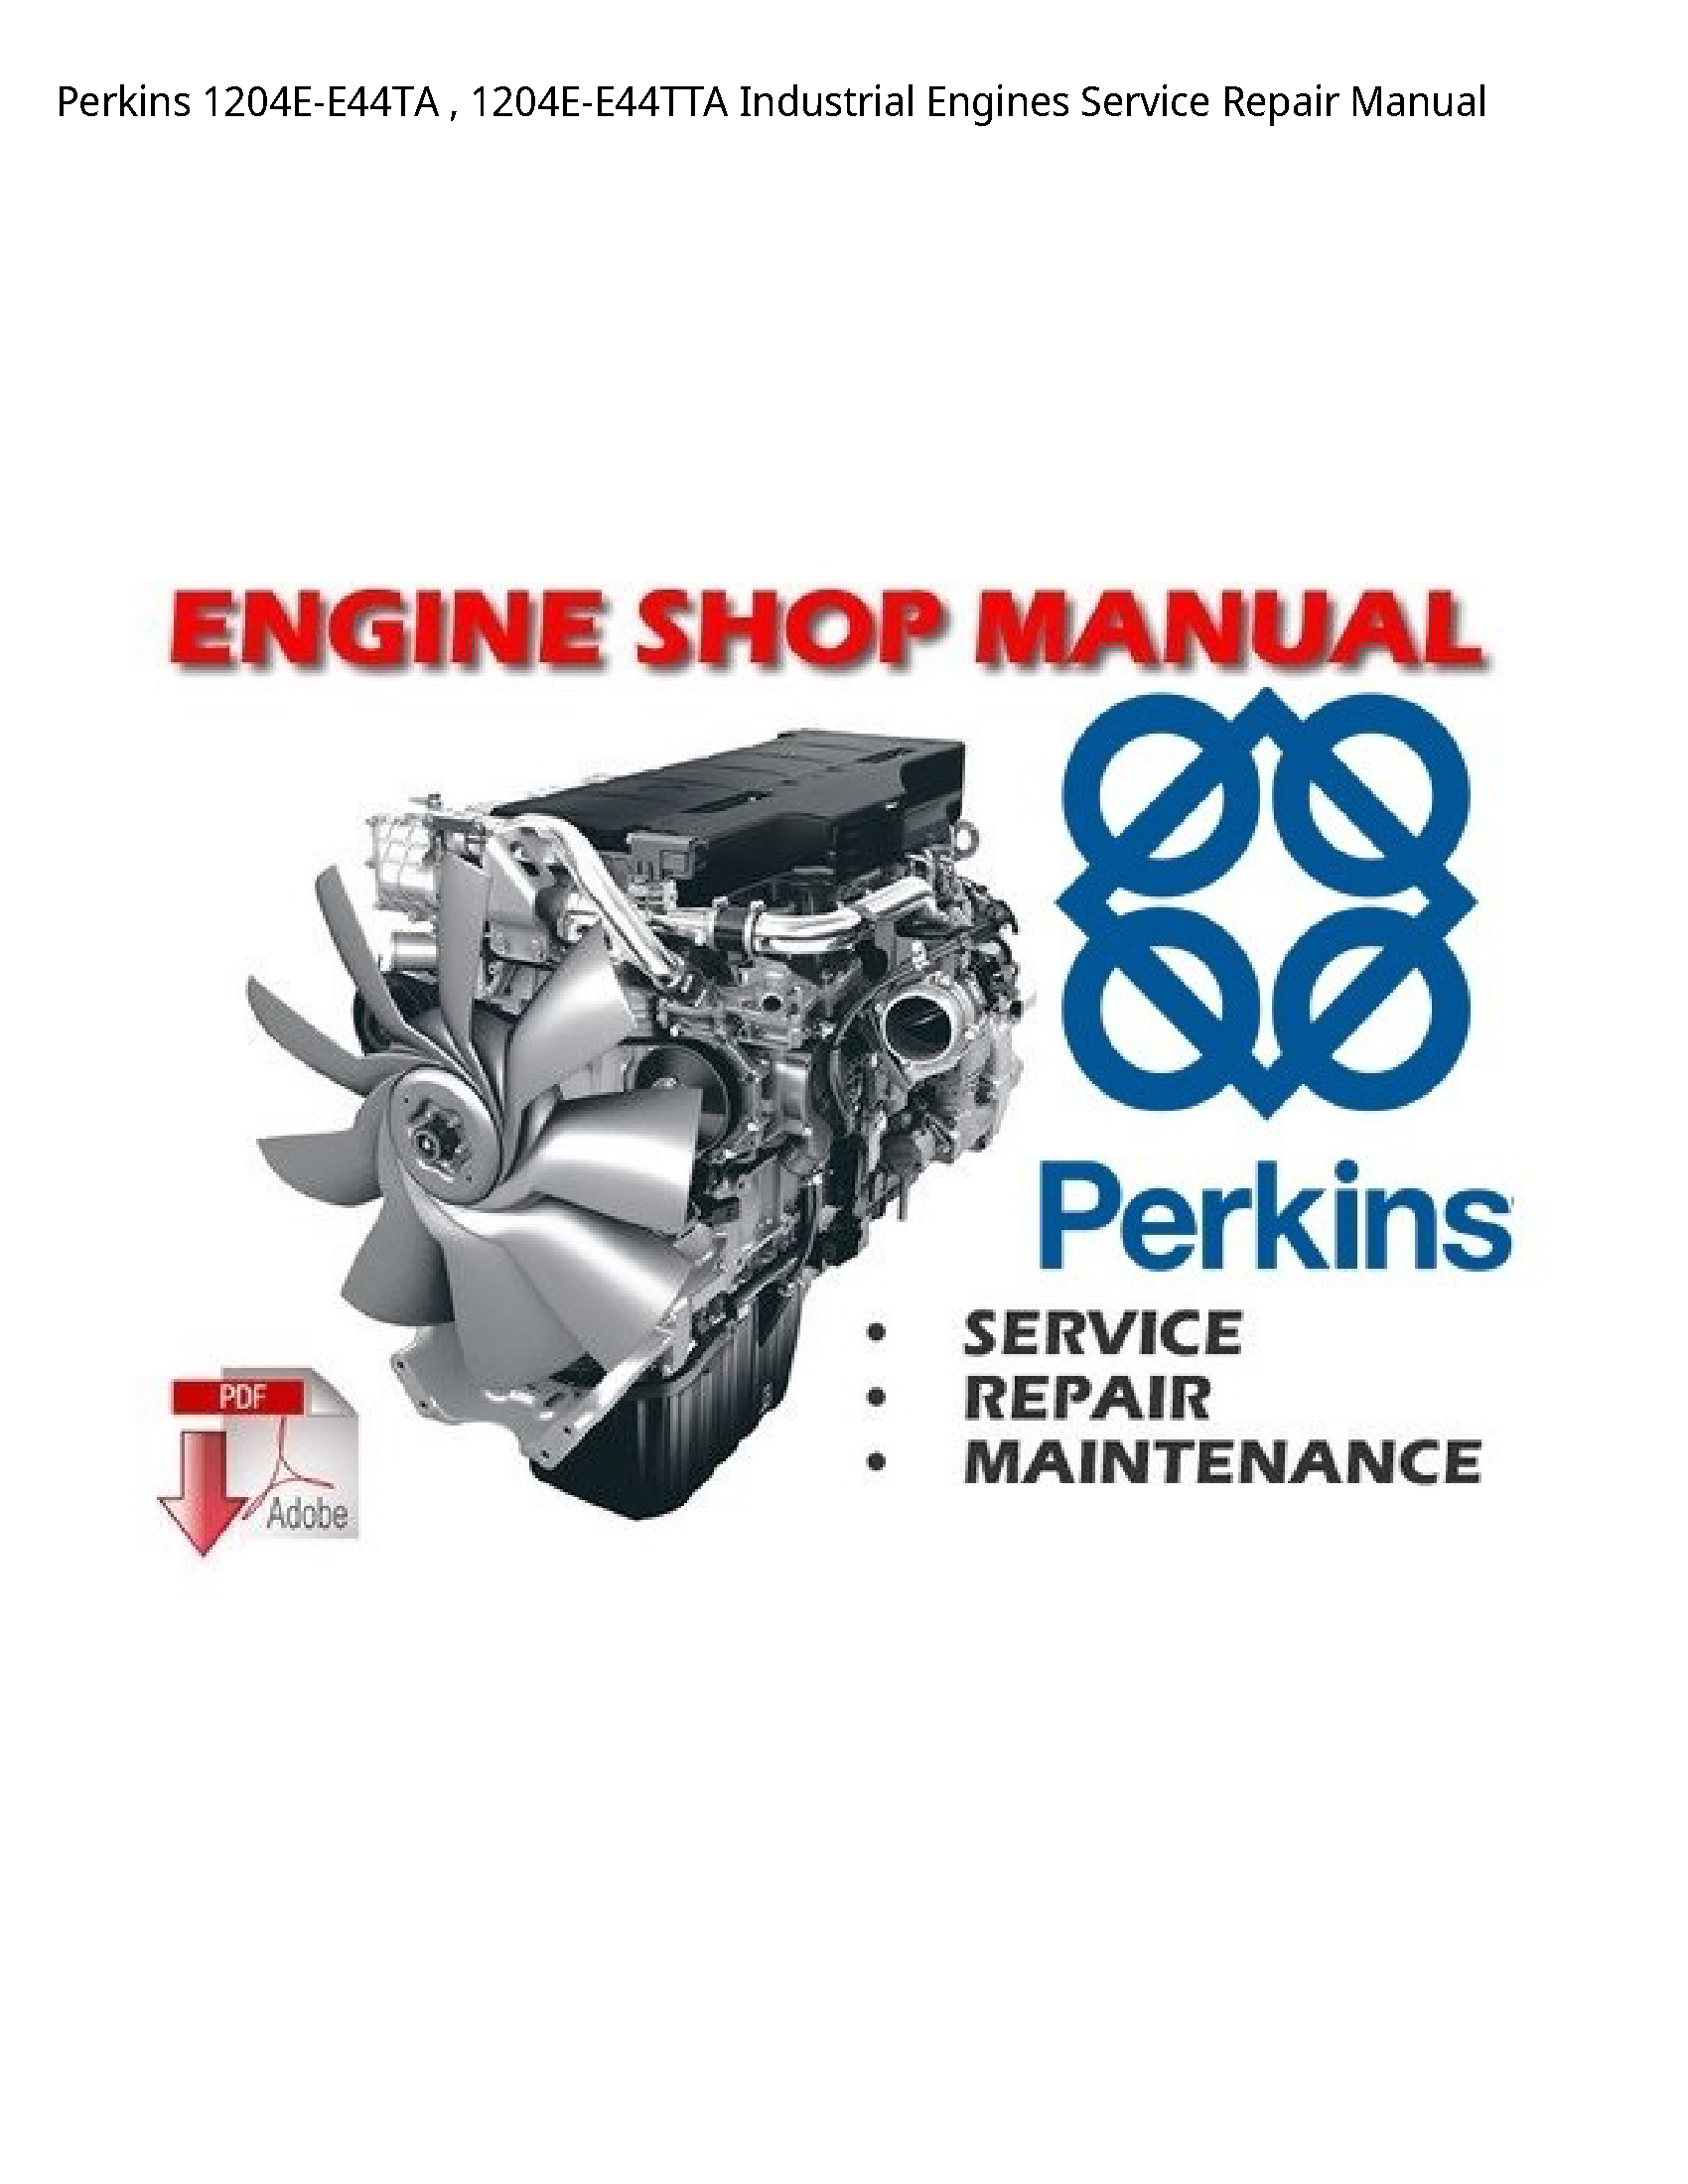 Perkins 1204E-E44TA Industrial Engines manual